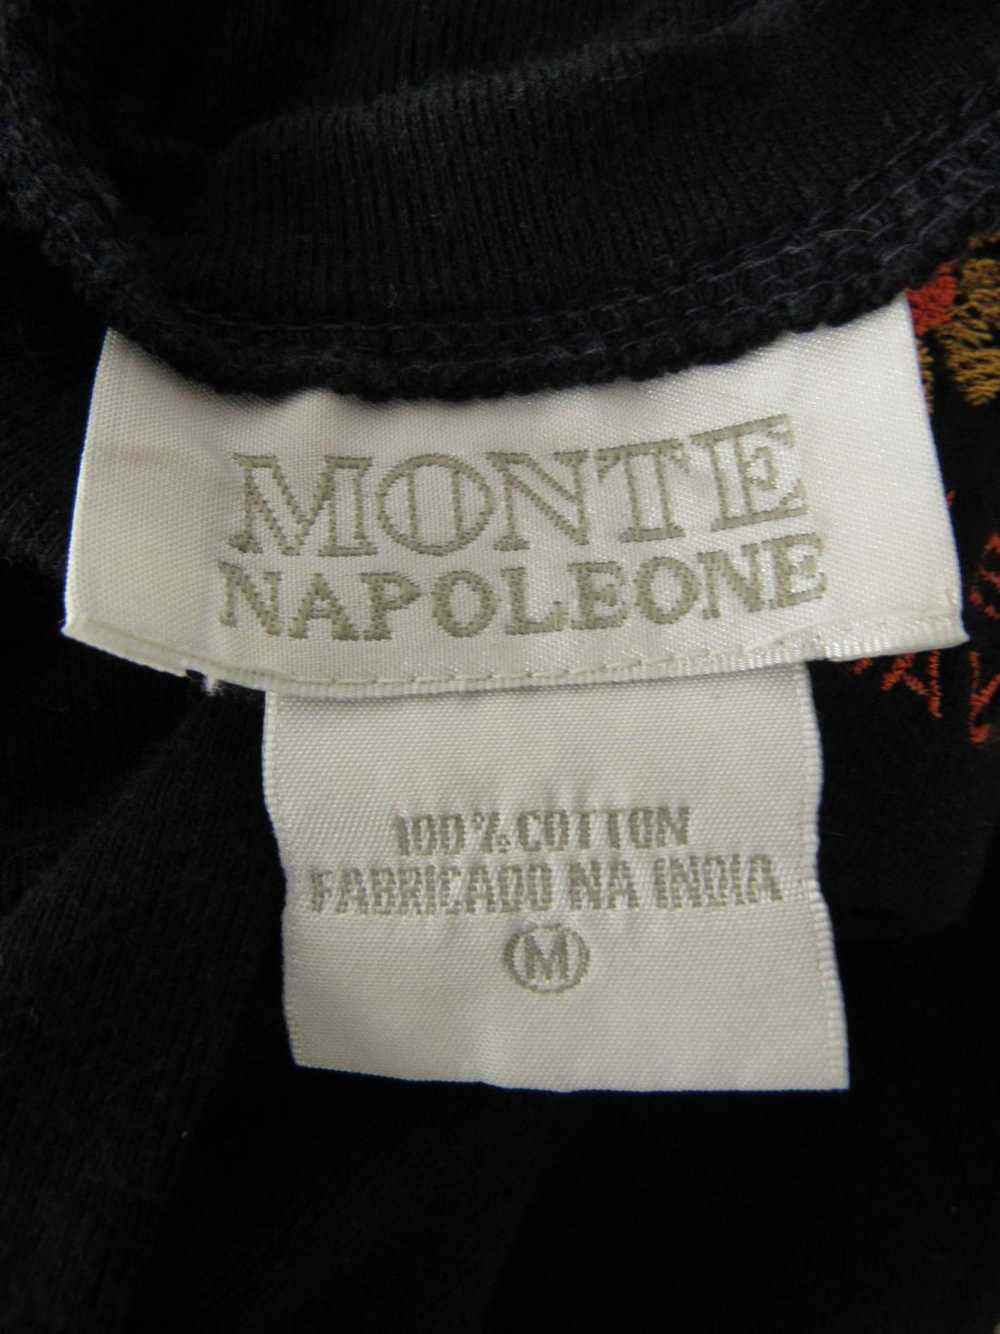 Monte Napoleone T-Shirt Top - image 3